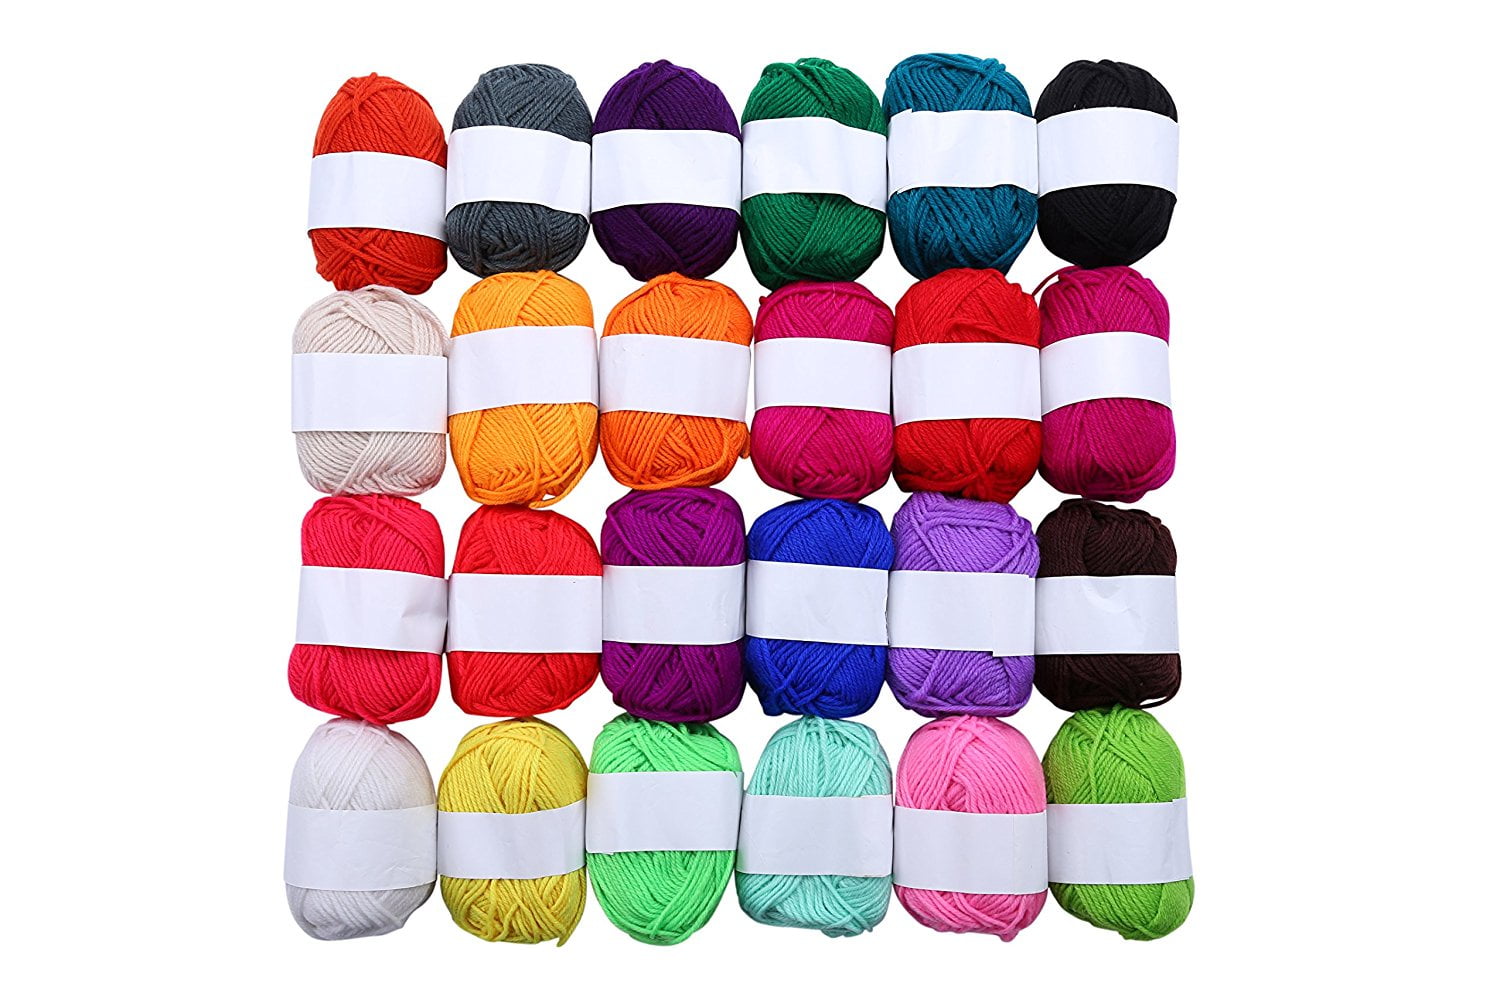 100% Acrylic Yarn, Colorful Crochet Yarn Skeins for Knitting/Crocheting ...